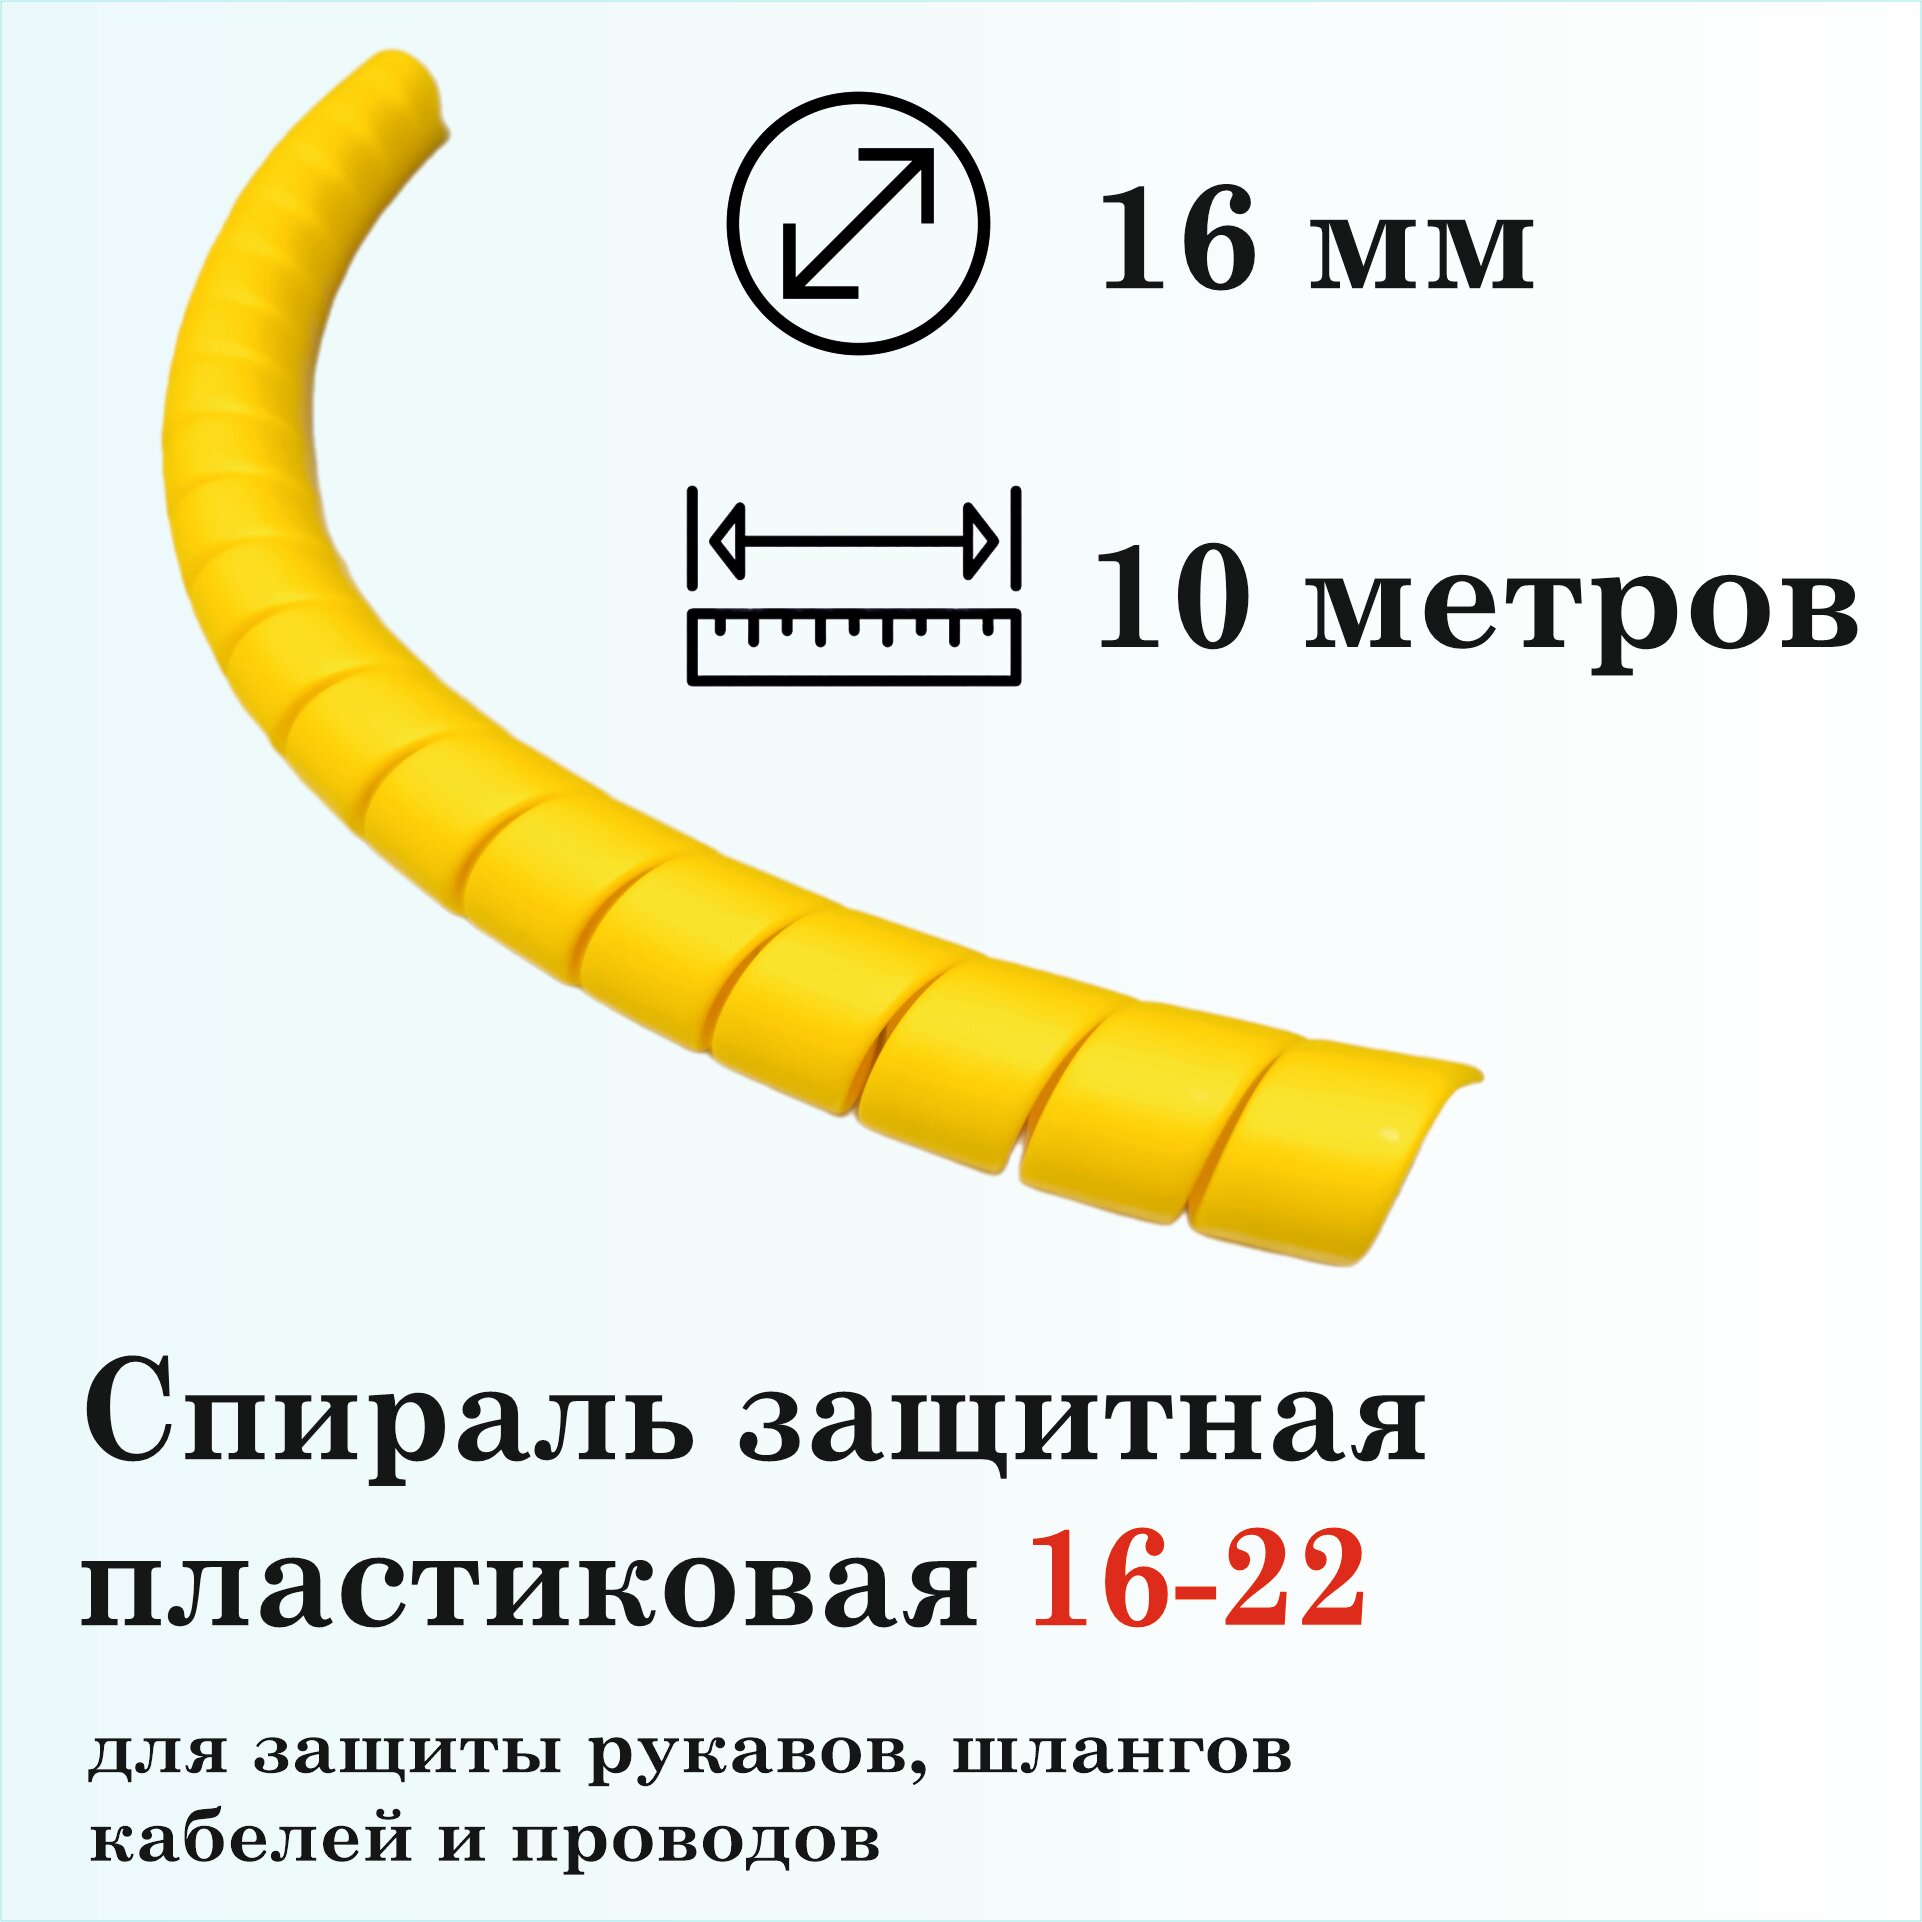 Спираль защитная пластиковая 16-22, 10м, желтая